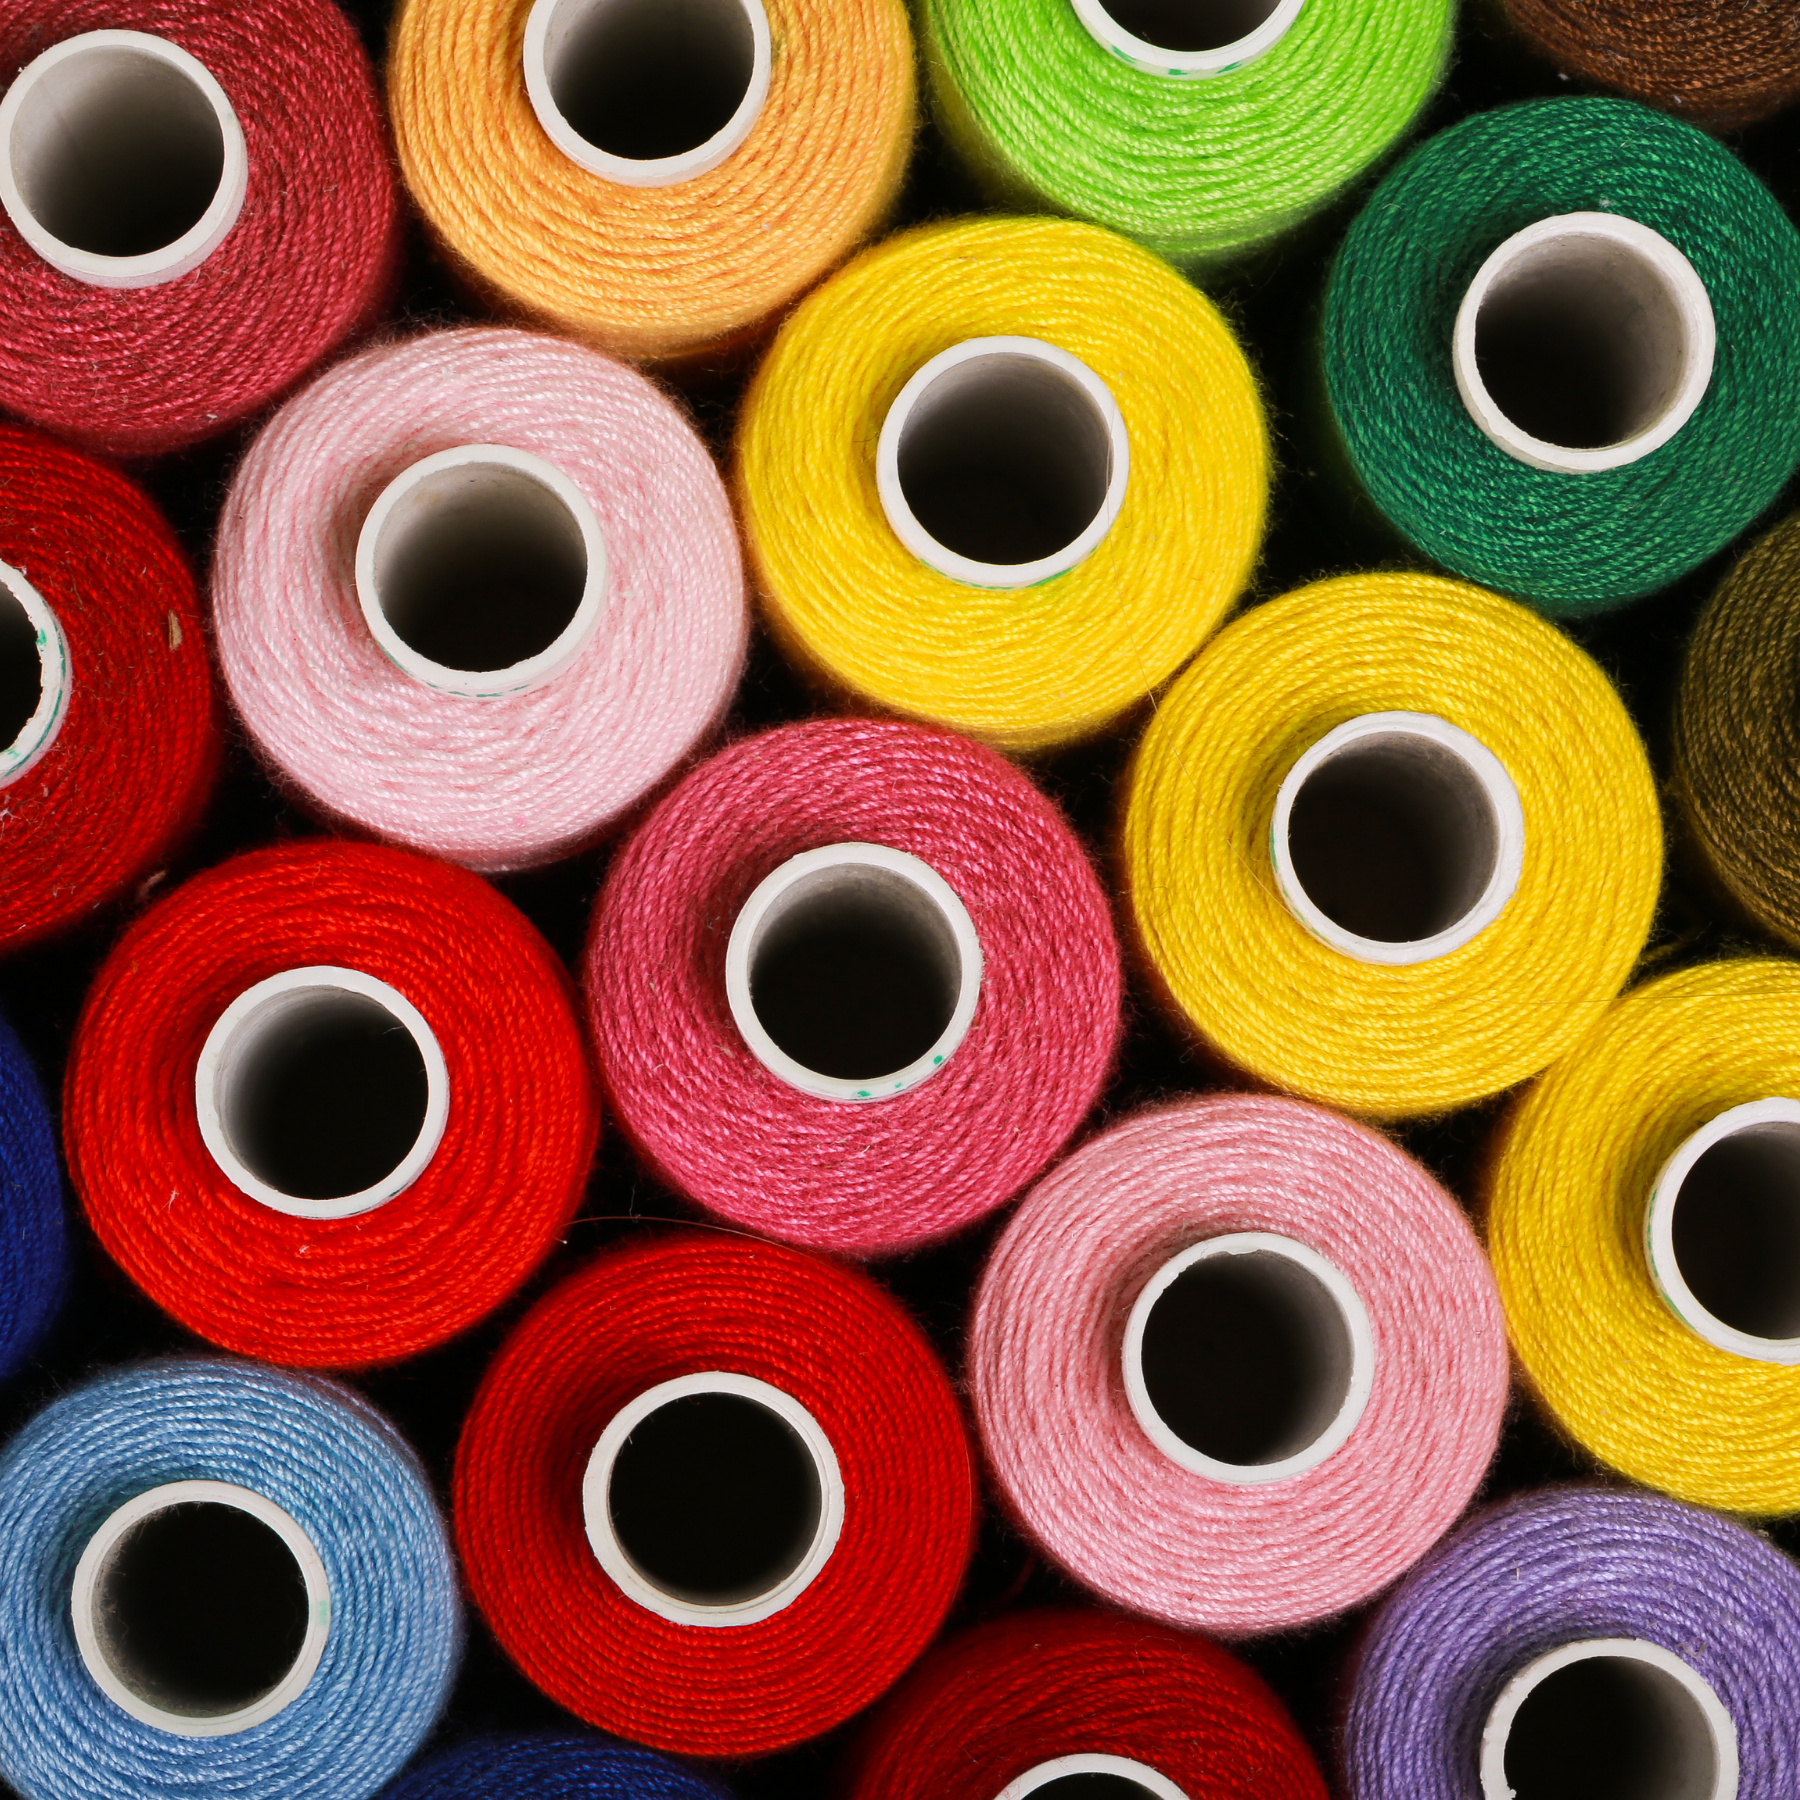 Glide Thread - Keep Sewing